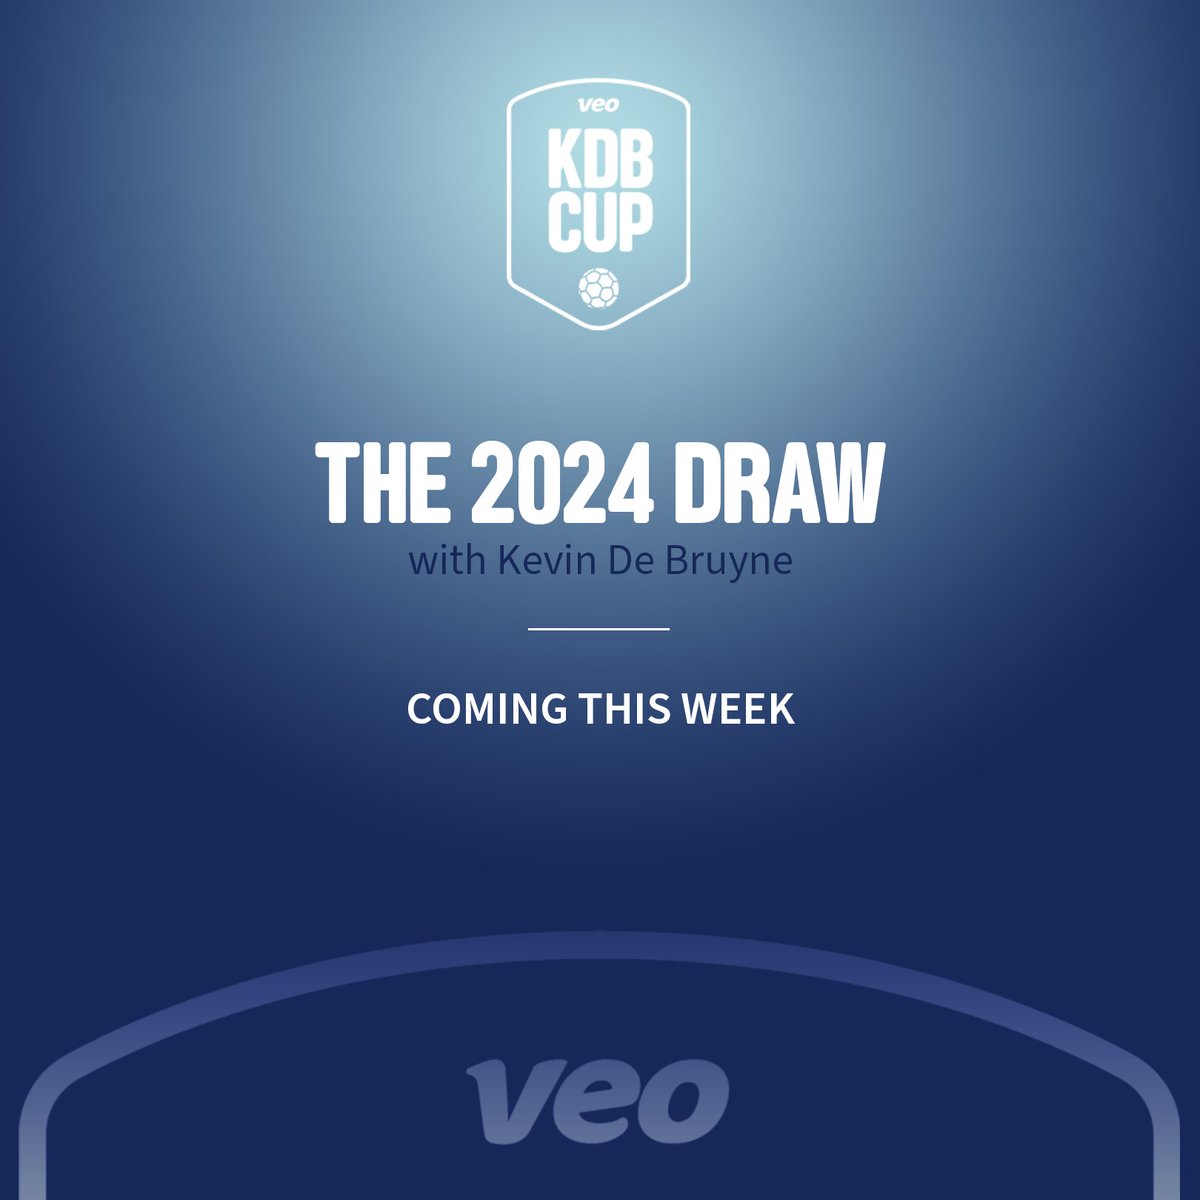 Time to get excited! Het is bijna tijd om de loting van KDB Cup 2024 bekend te maken… We are getting very close to the 2024 KDB Cup draw reveal… #veokdbcup2024